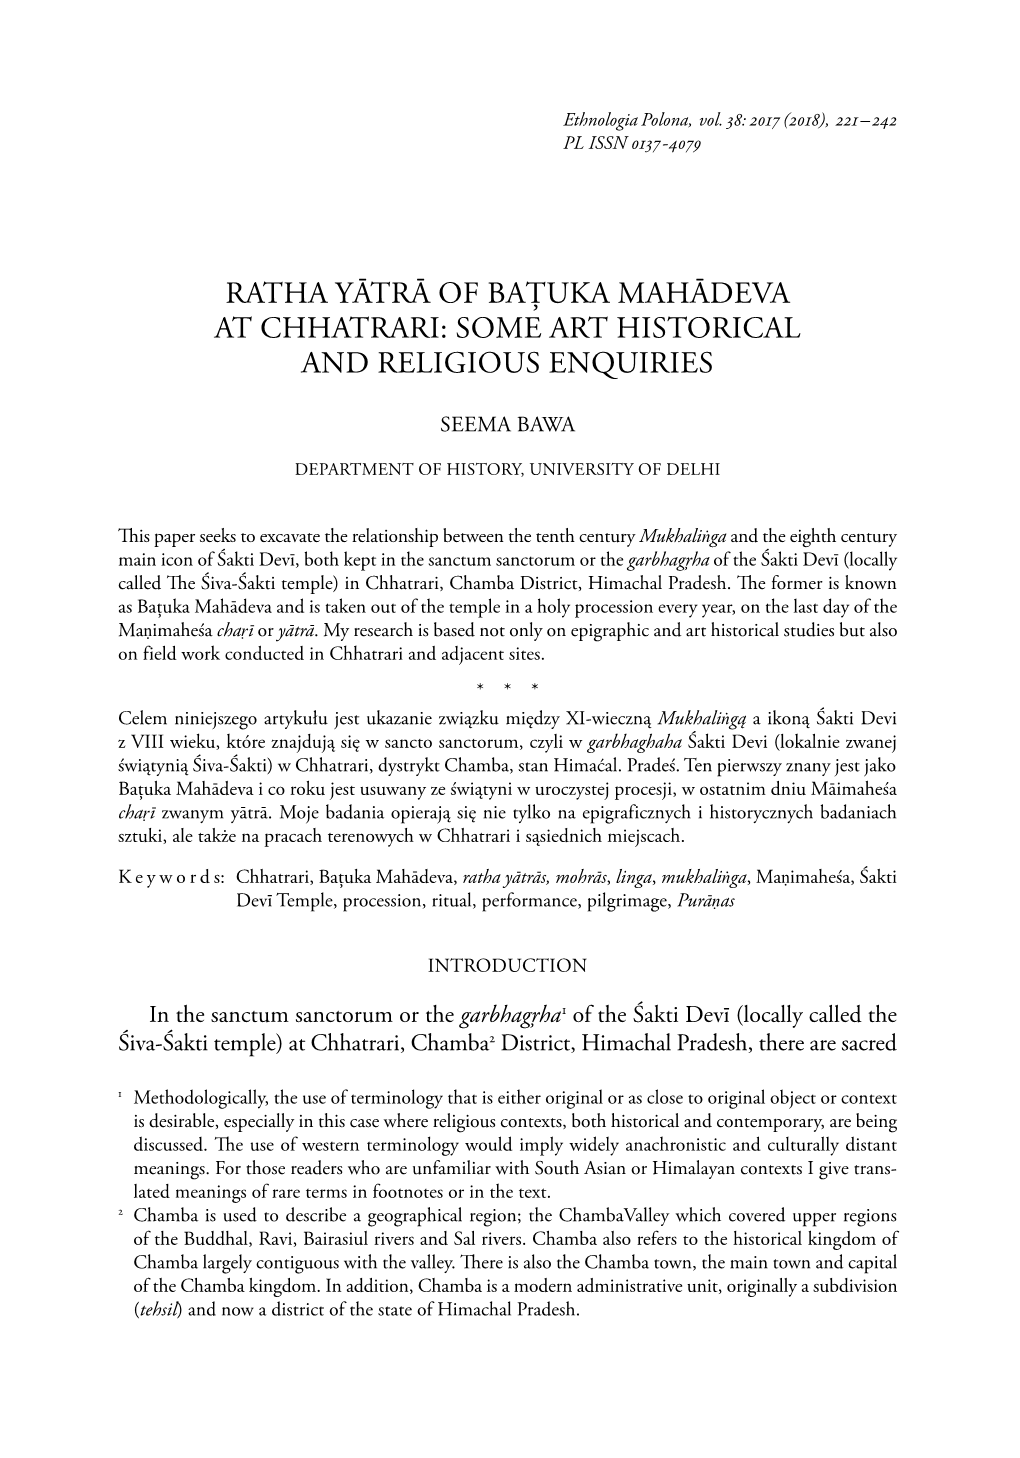 Ratha Yātrā of Bațuka Mahādeva at Chhatrari: Some Art Historical and Religious Enquiries